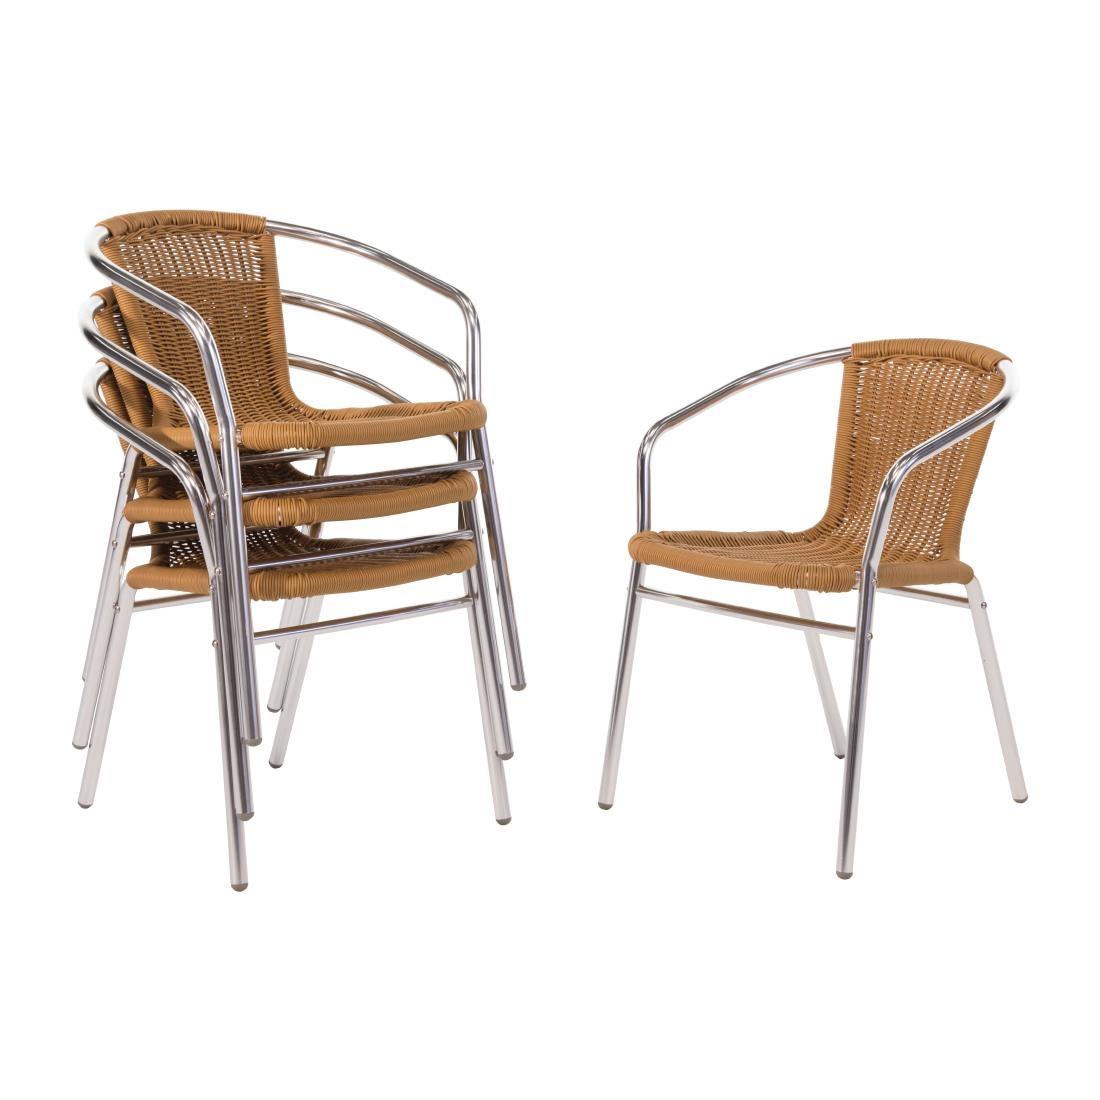 Bolero Aluminium and Natural Wicker Chair (Pack of 4) - U422  - 1